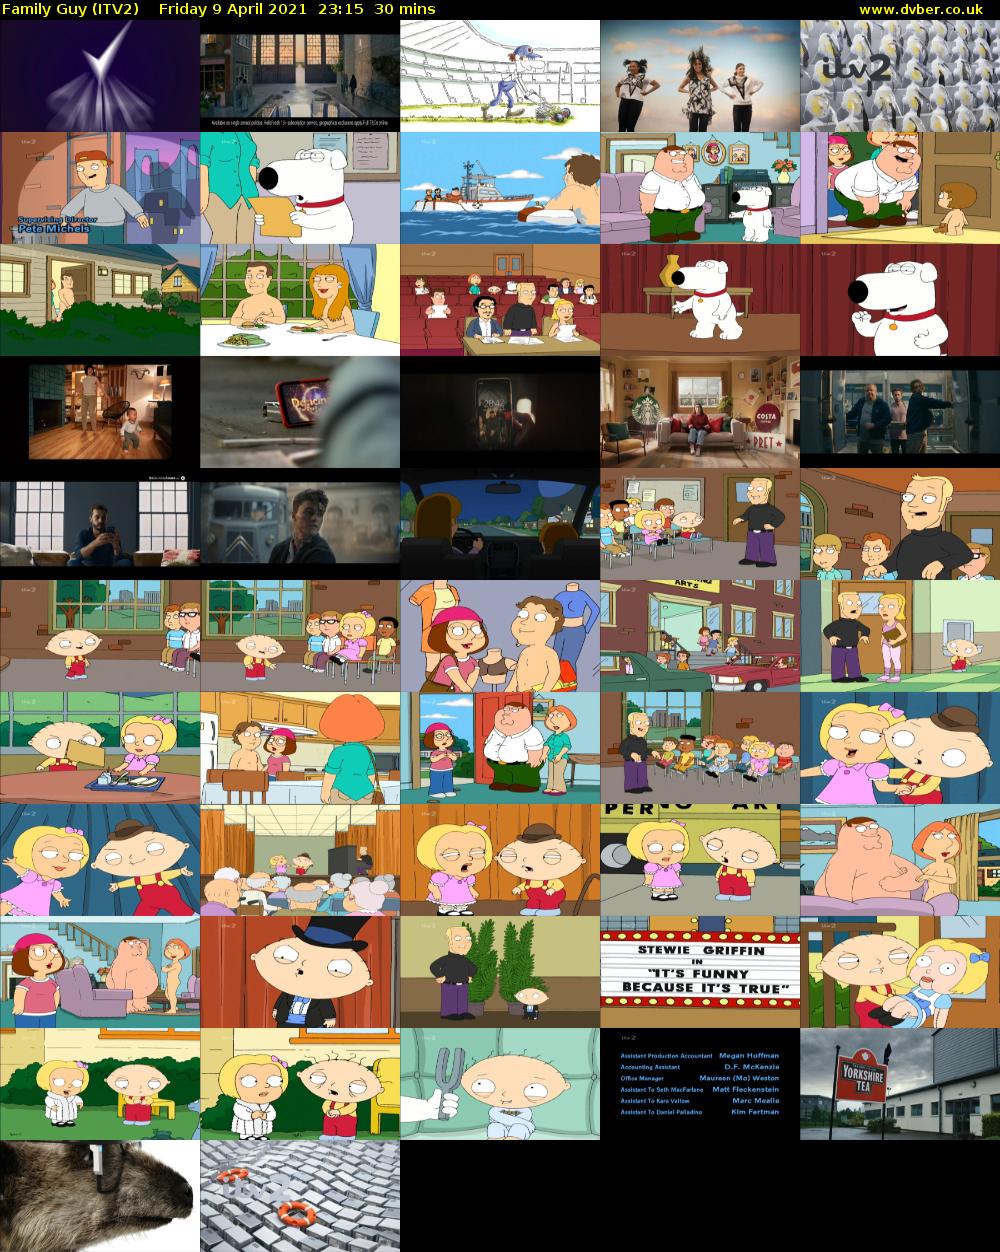 Family Guy (ITV2) Friday 9 April 2021 23:15 - 23:45